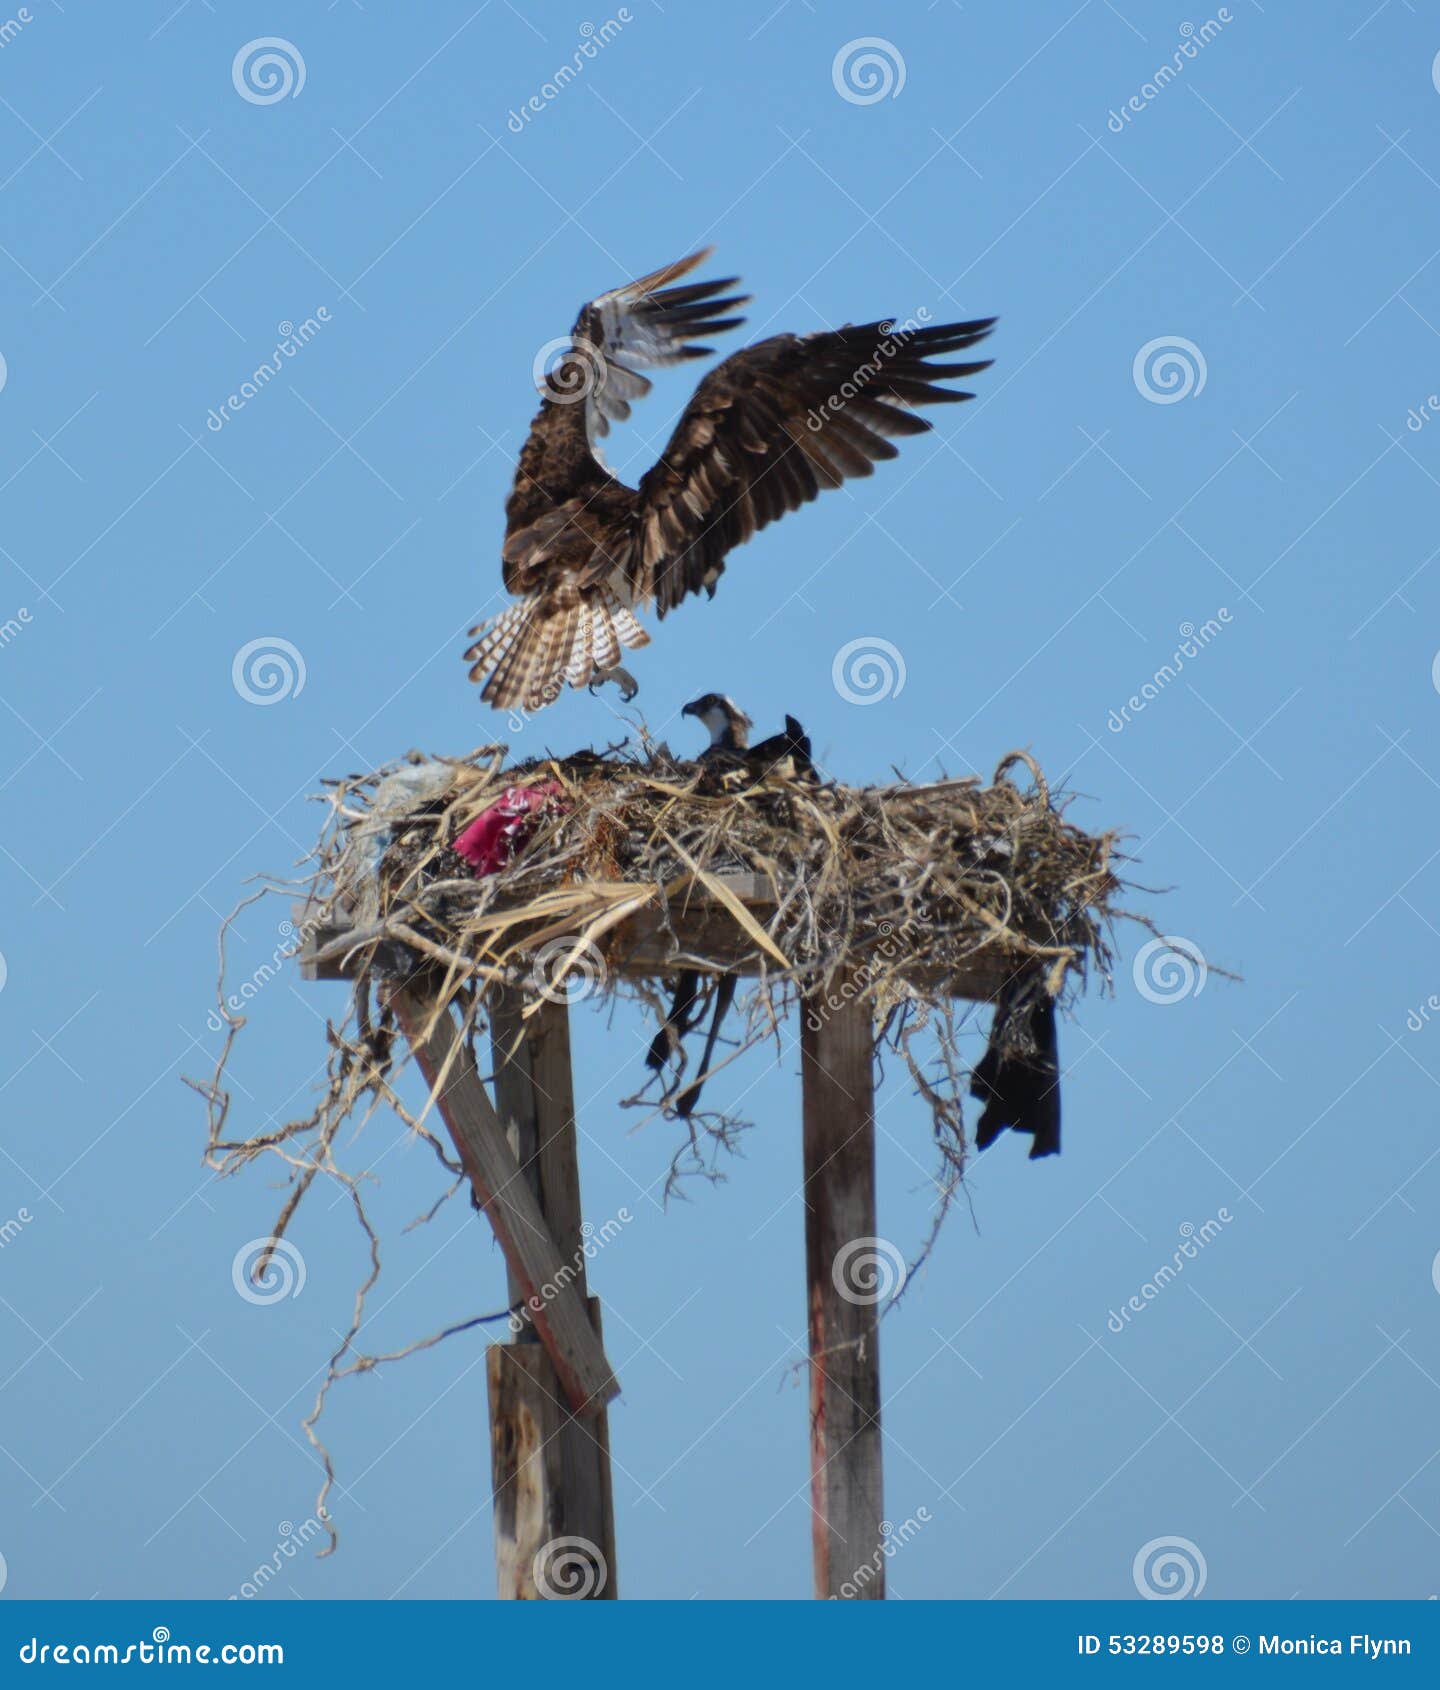 ospreylanding in the nest in guerro negro in baja california del sur, mexico